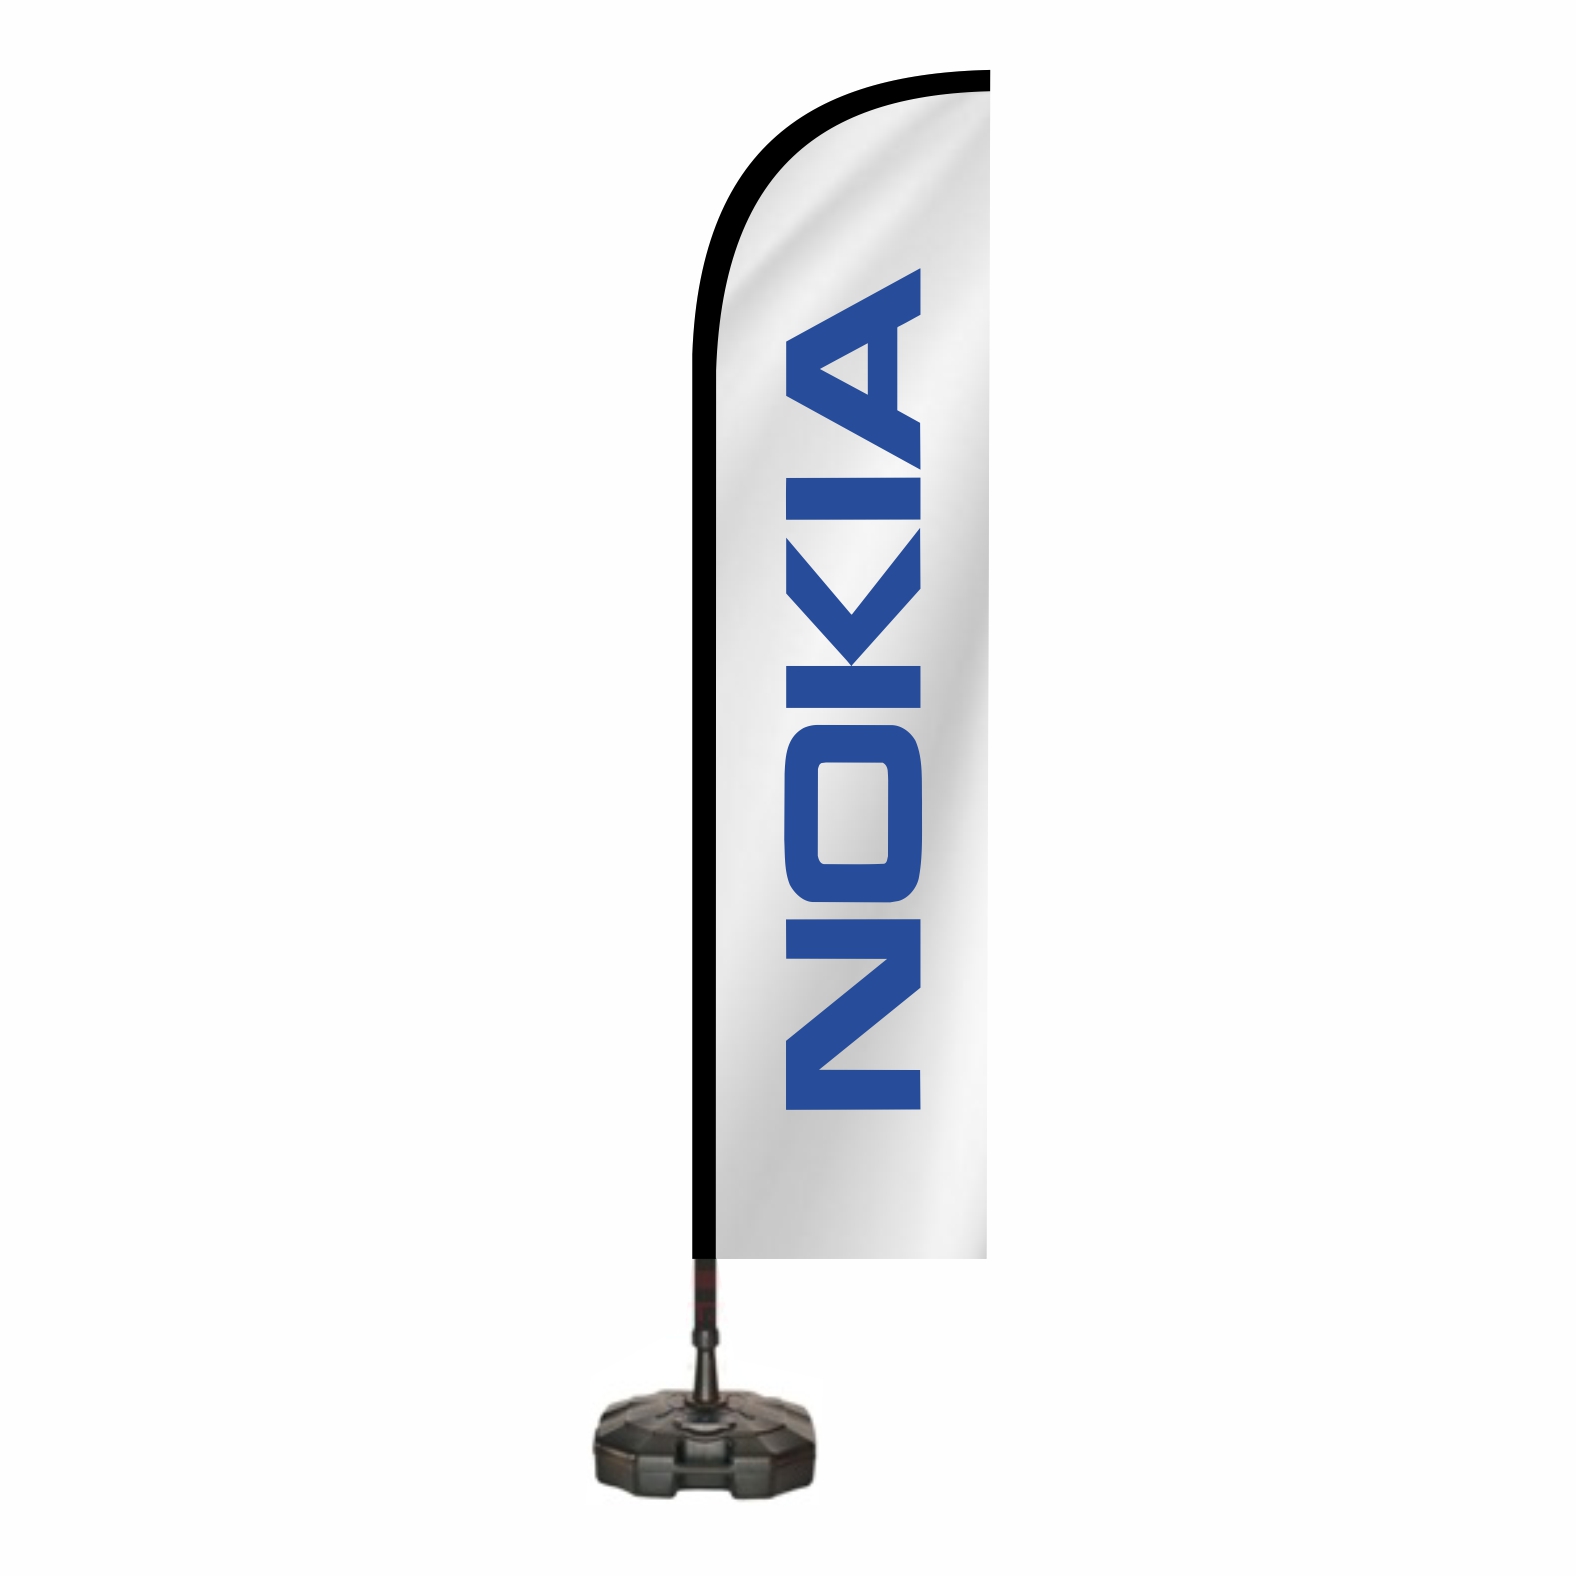 Nokia Cadde Bayra Ebatlar